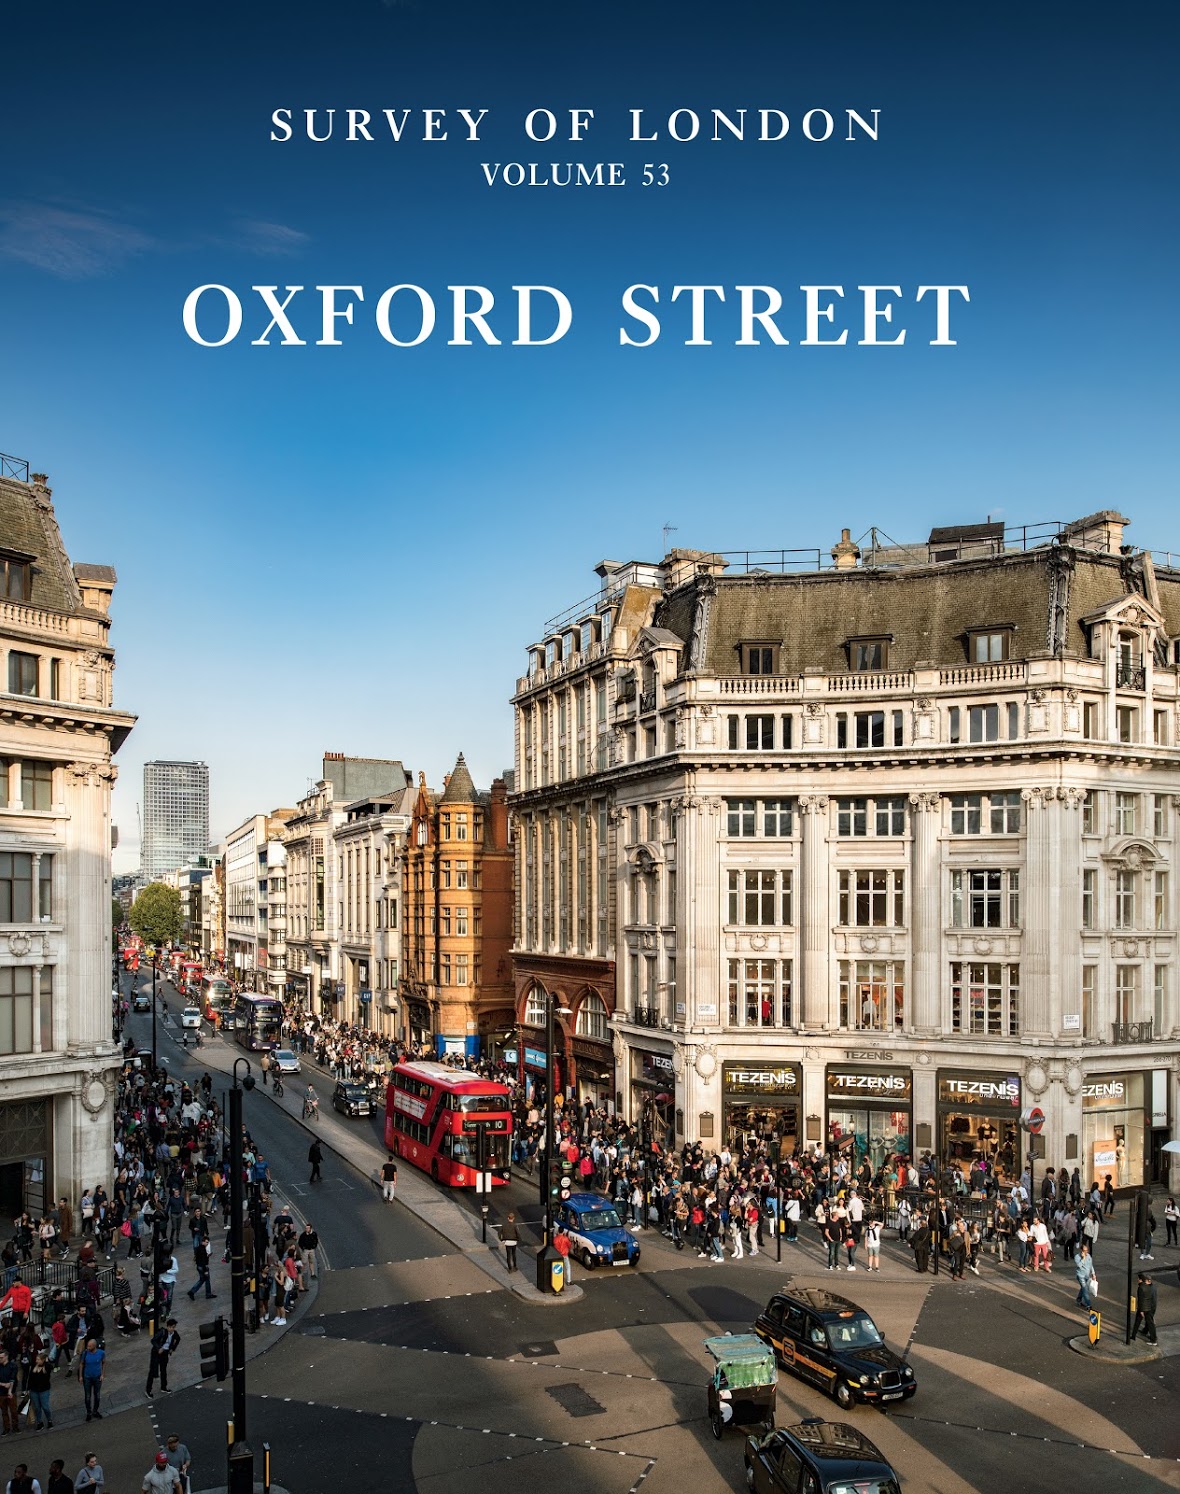 Oxford street shopping